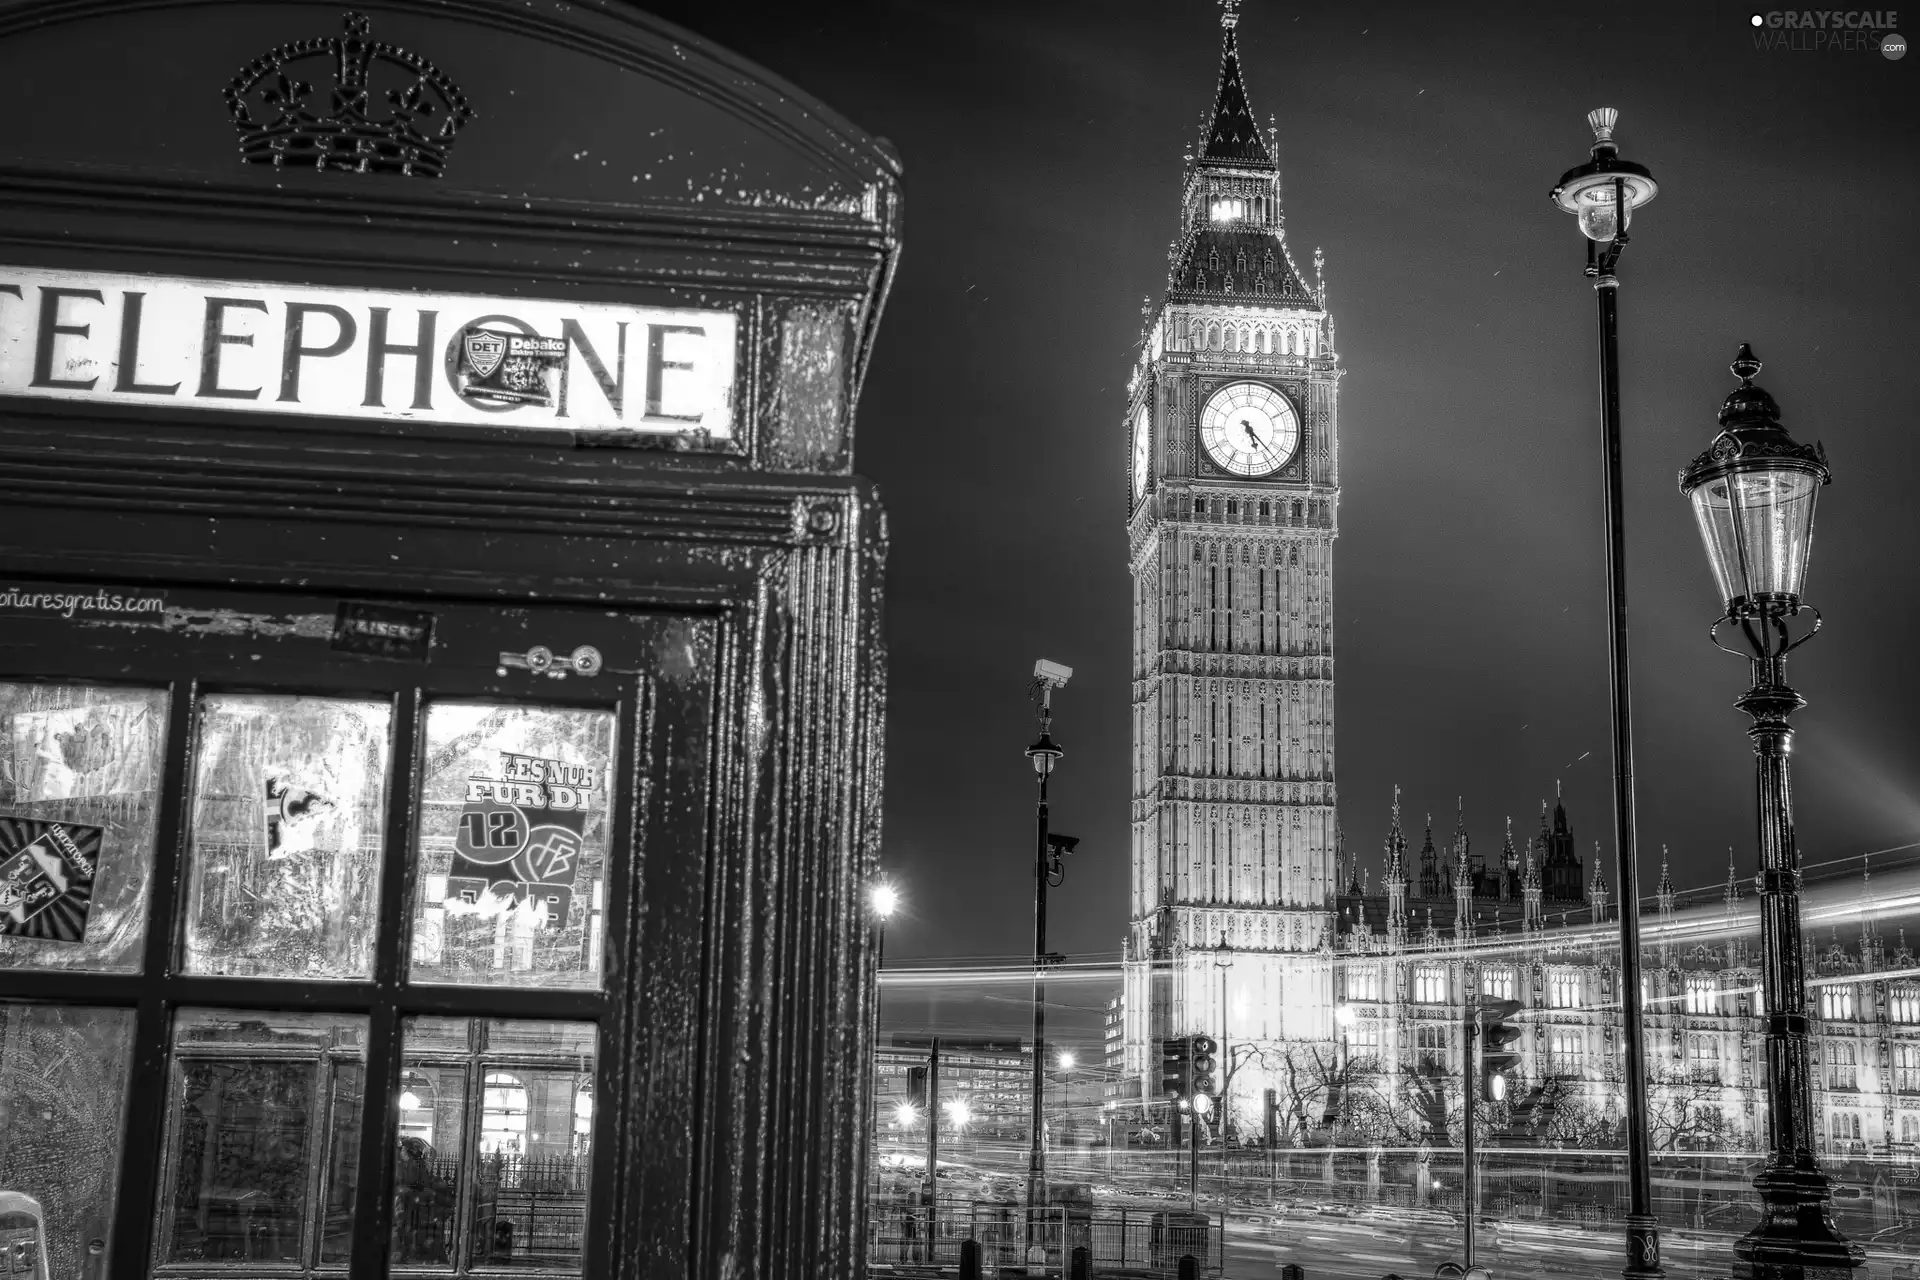 Big Ben, phone, London, booth